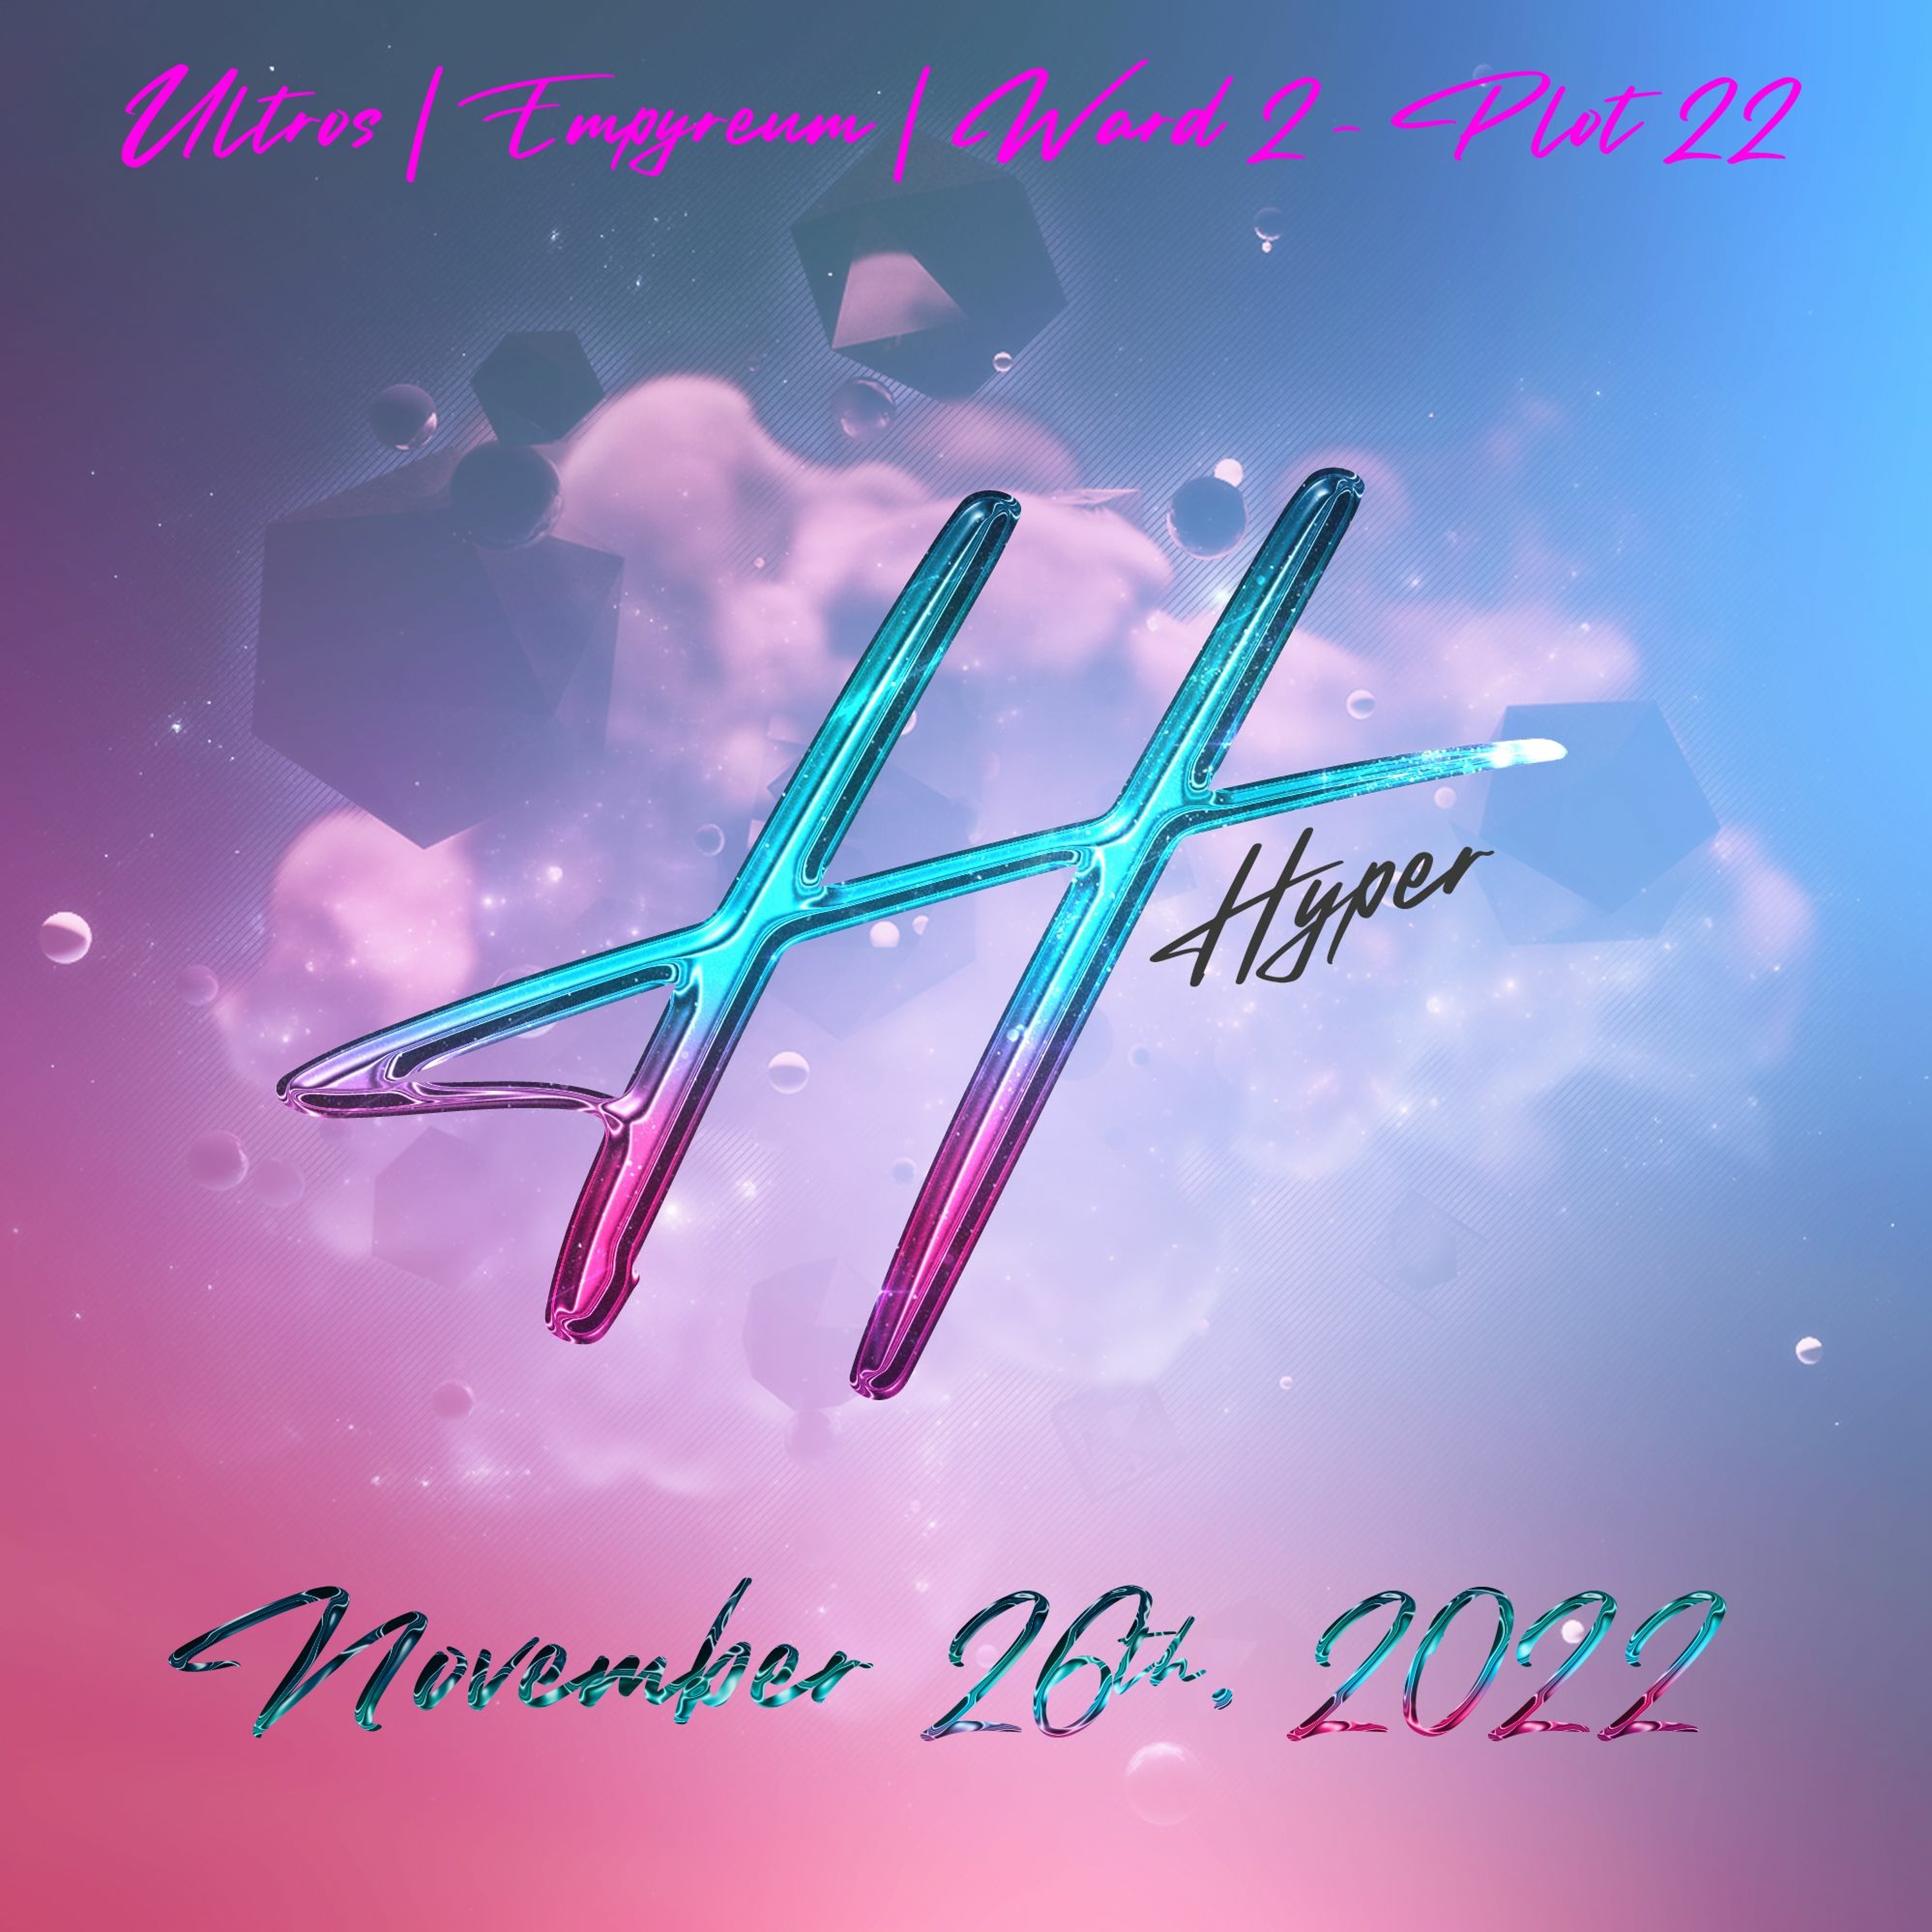 Live @ HyPeR - November 26th, 2022